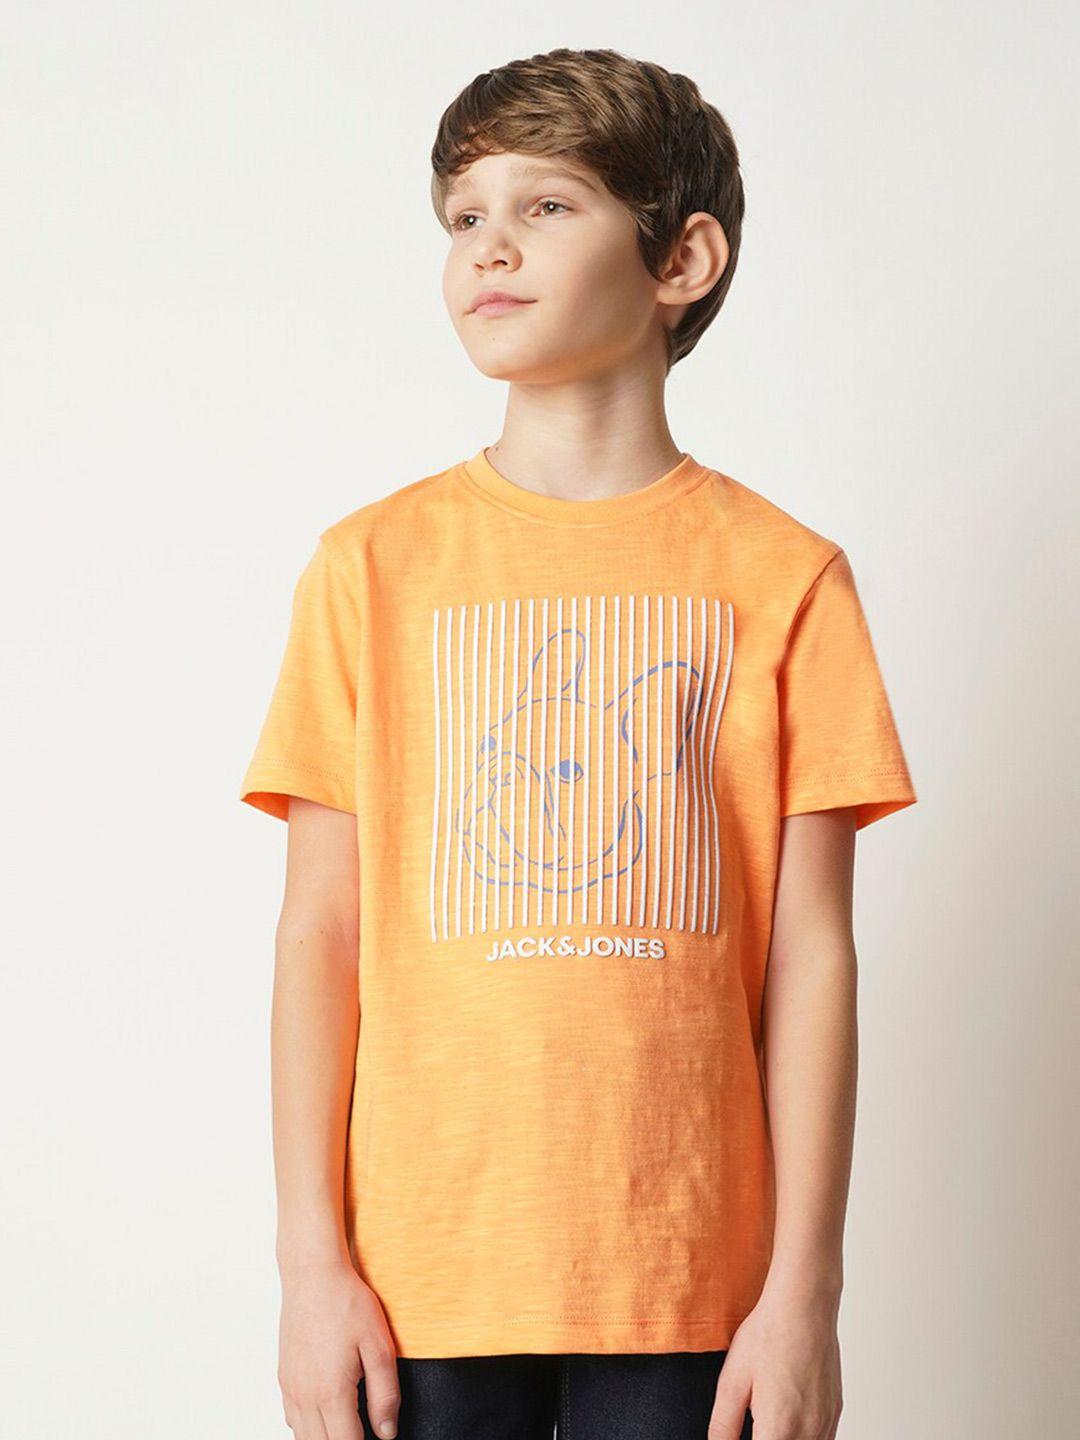 Jack & Jones Junior Boys Typography Printed Applique T-shirt